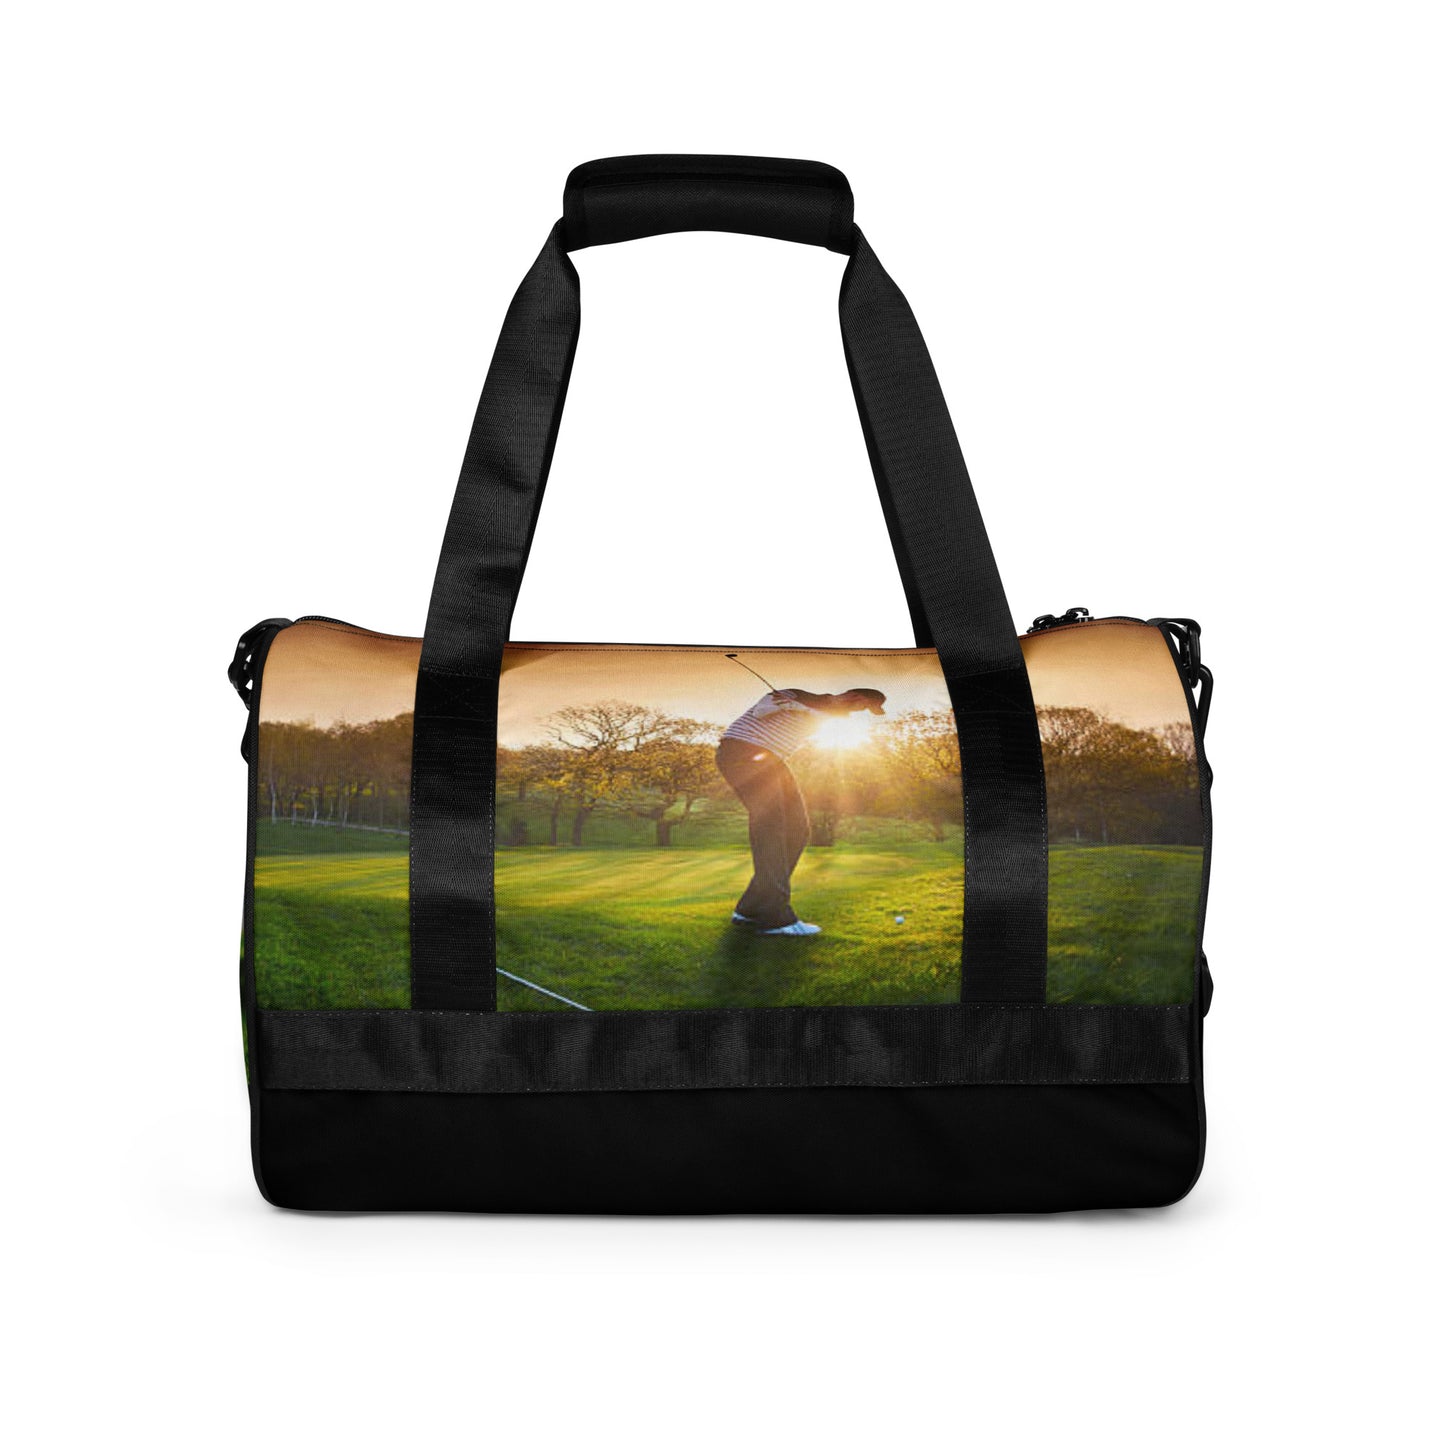 Golf 954 Signature bag